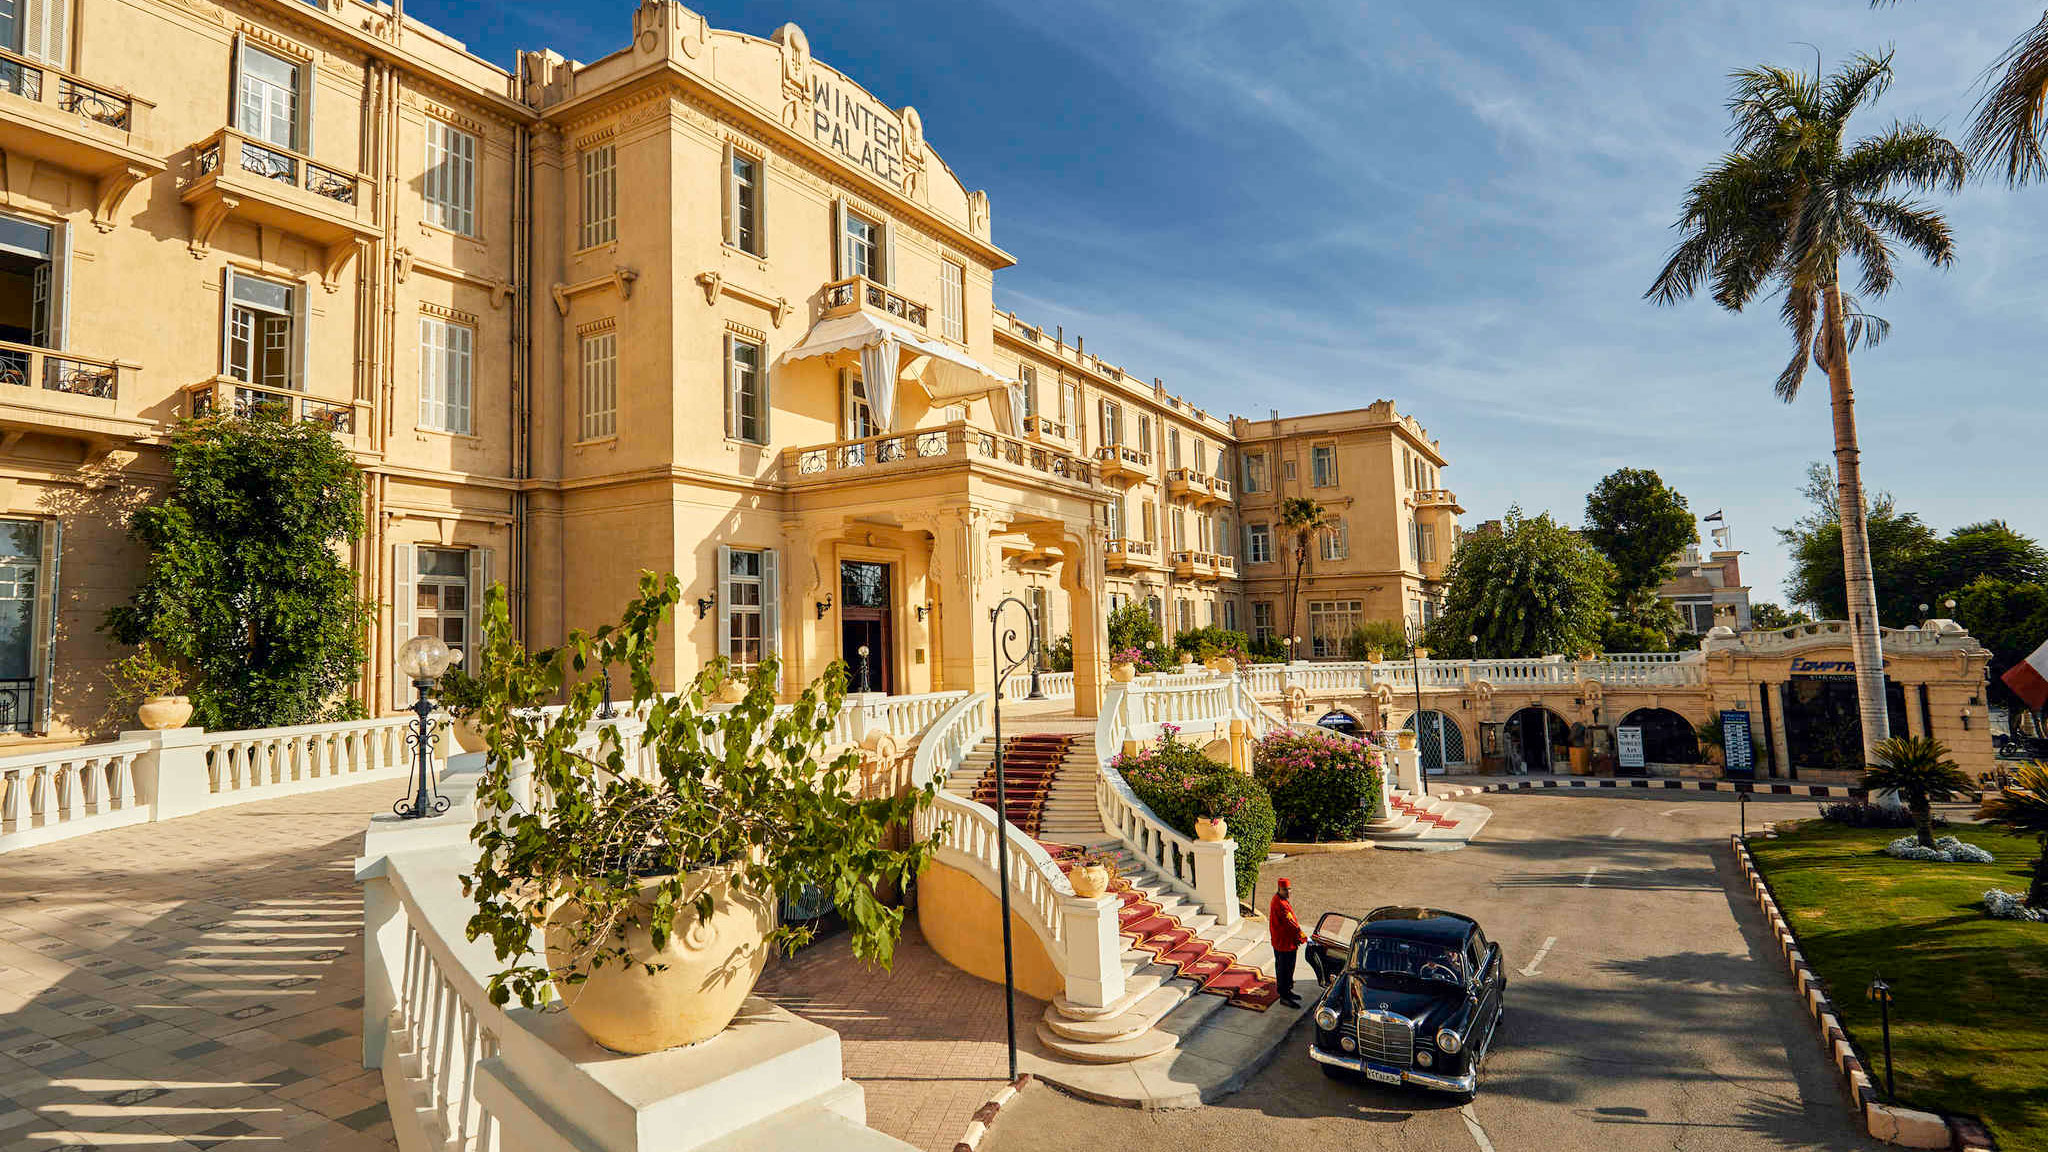 Hotels of the world: Sofitel Winter Palace Luxor, Egypt